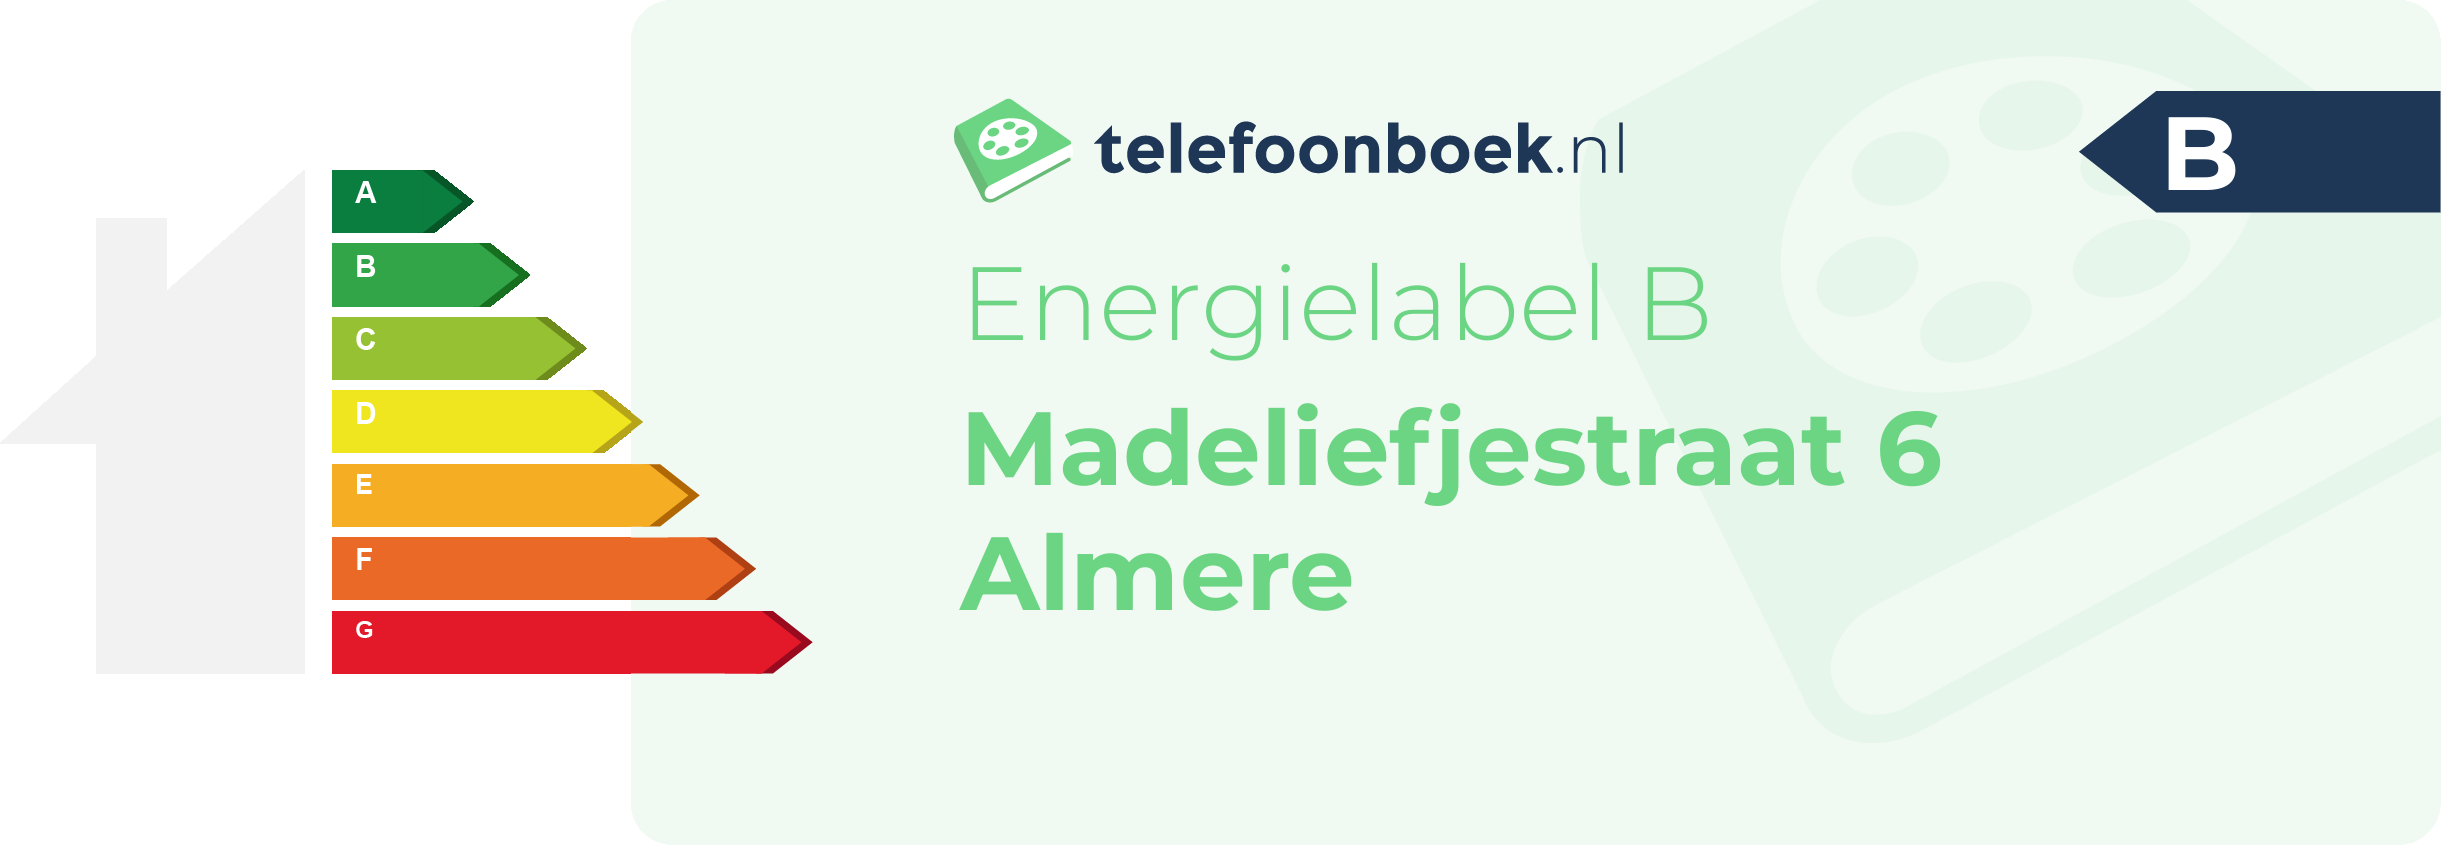 Energielabel Madeliefjestraat 6 Almere